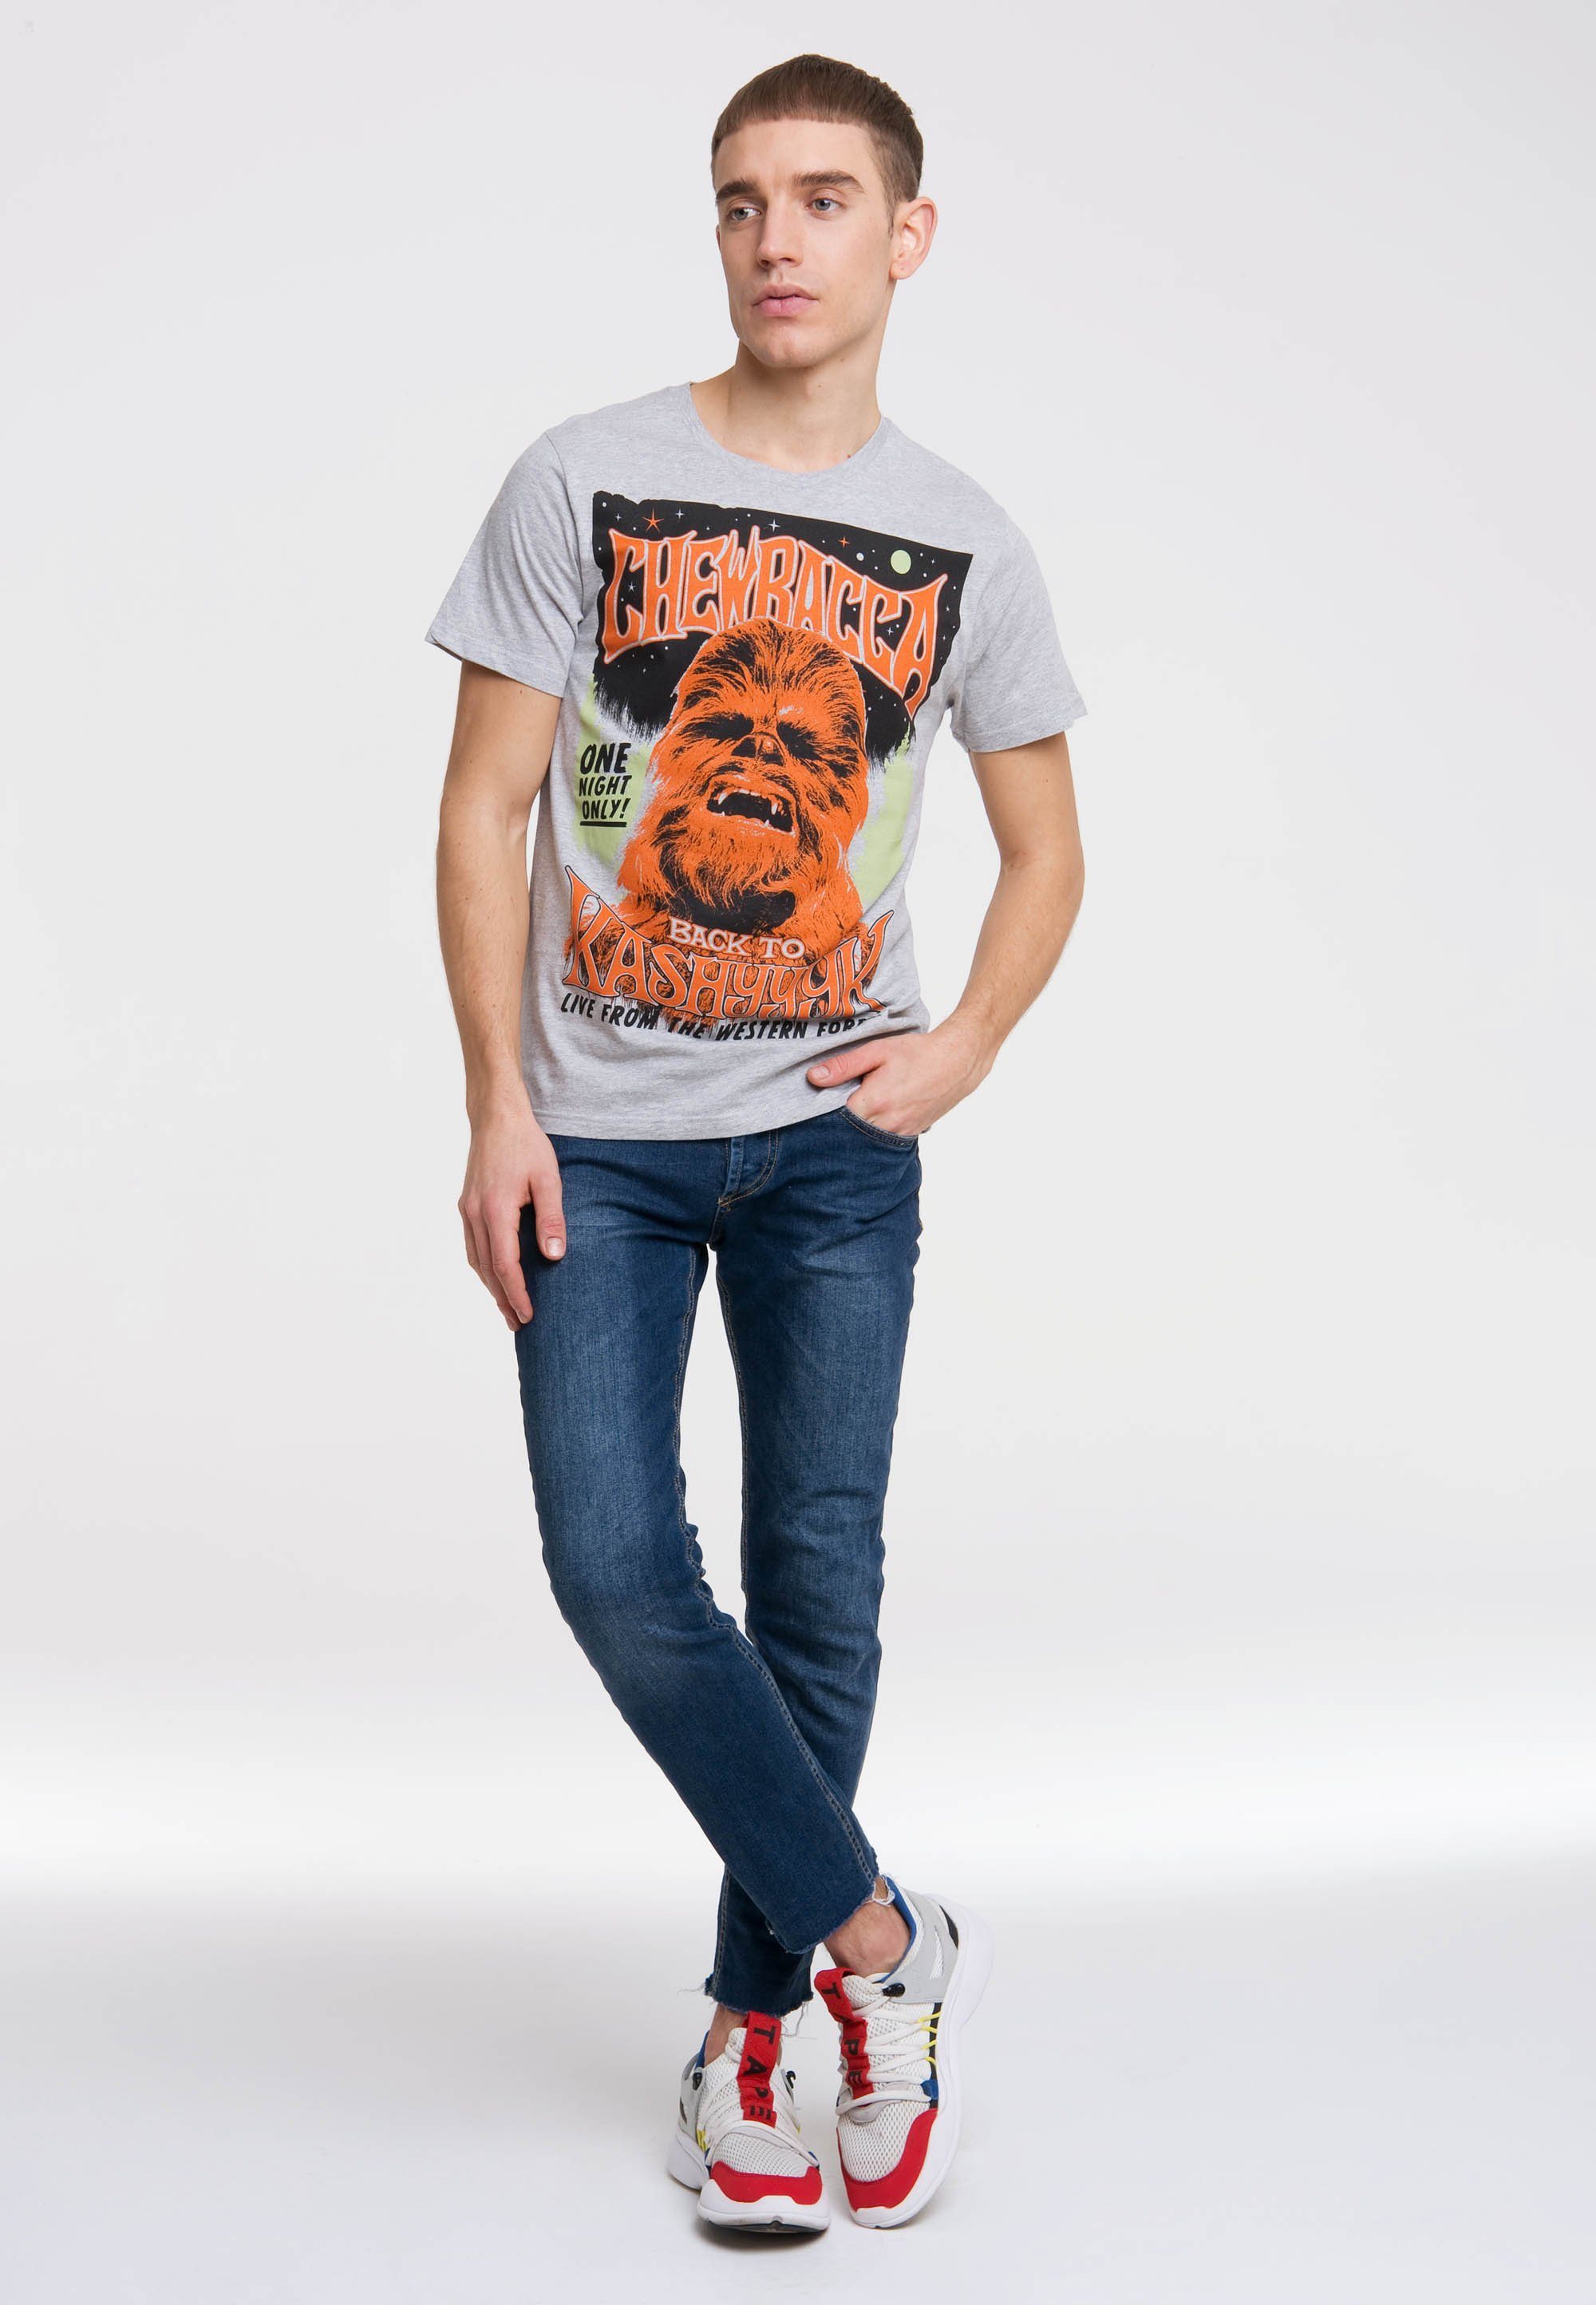 LOGOSHIRT T-Shirt Star Wars - Chewbacca - Back To Kashyyyk mit Chewbacca-Frontdruck